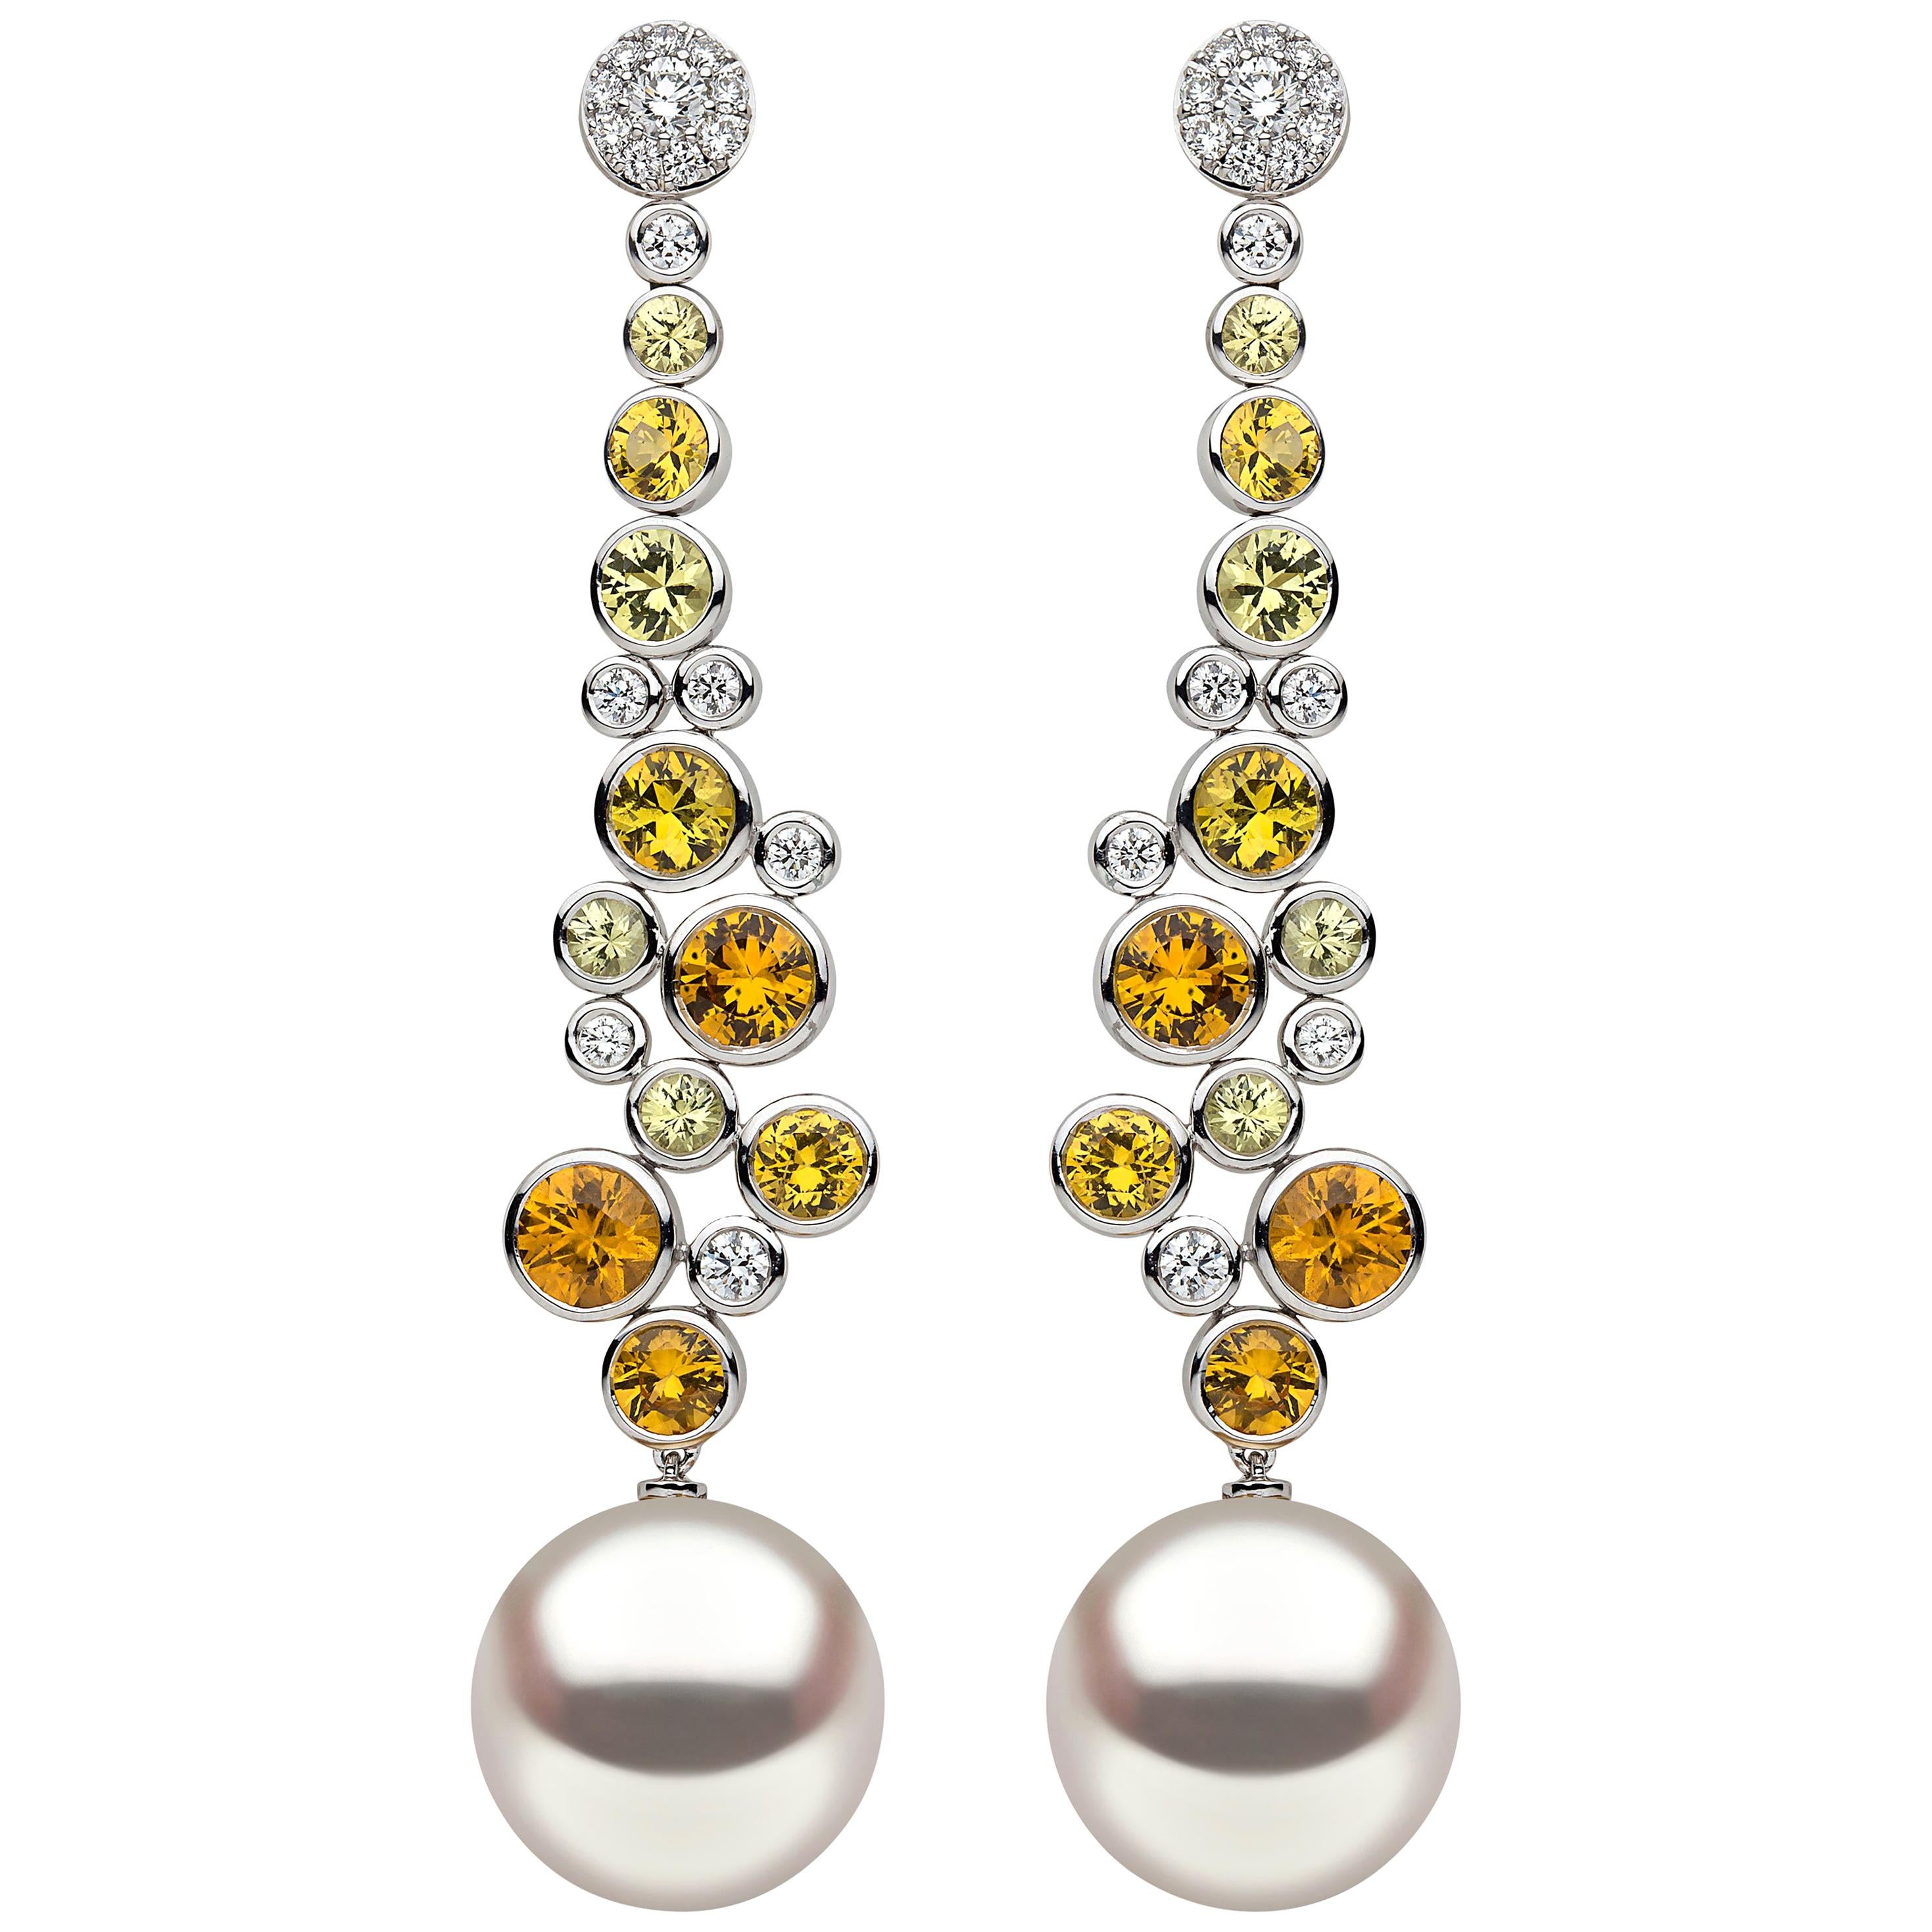 Yoko London South Sea Pearl Sapphire and Diamond Earrings in 18 Karat White Gold